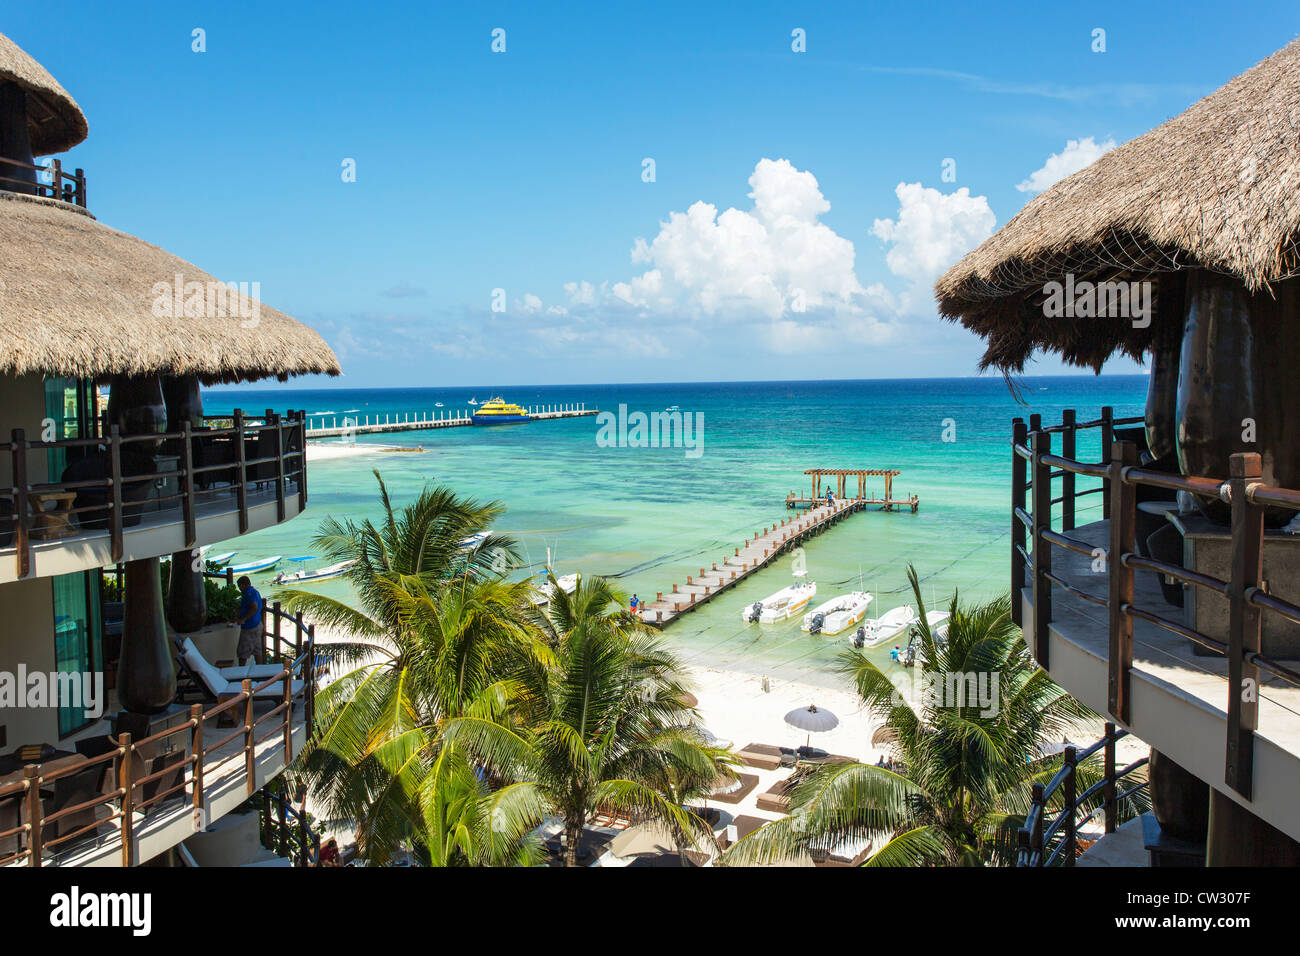 Messico,Quintana Roo Playa del Carmen, pier a beach proteso al Mar dei Caraibi Foto Stock